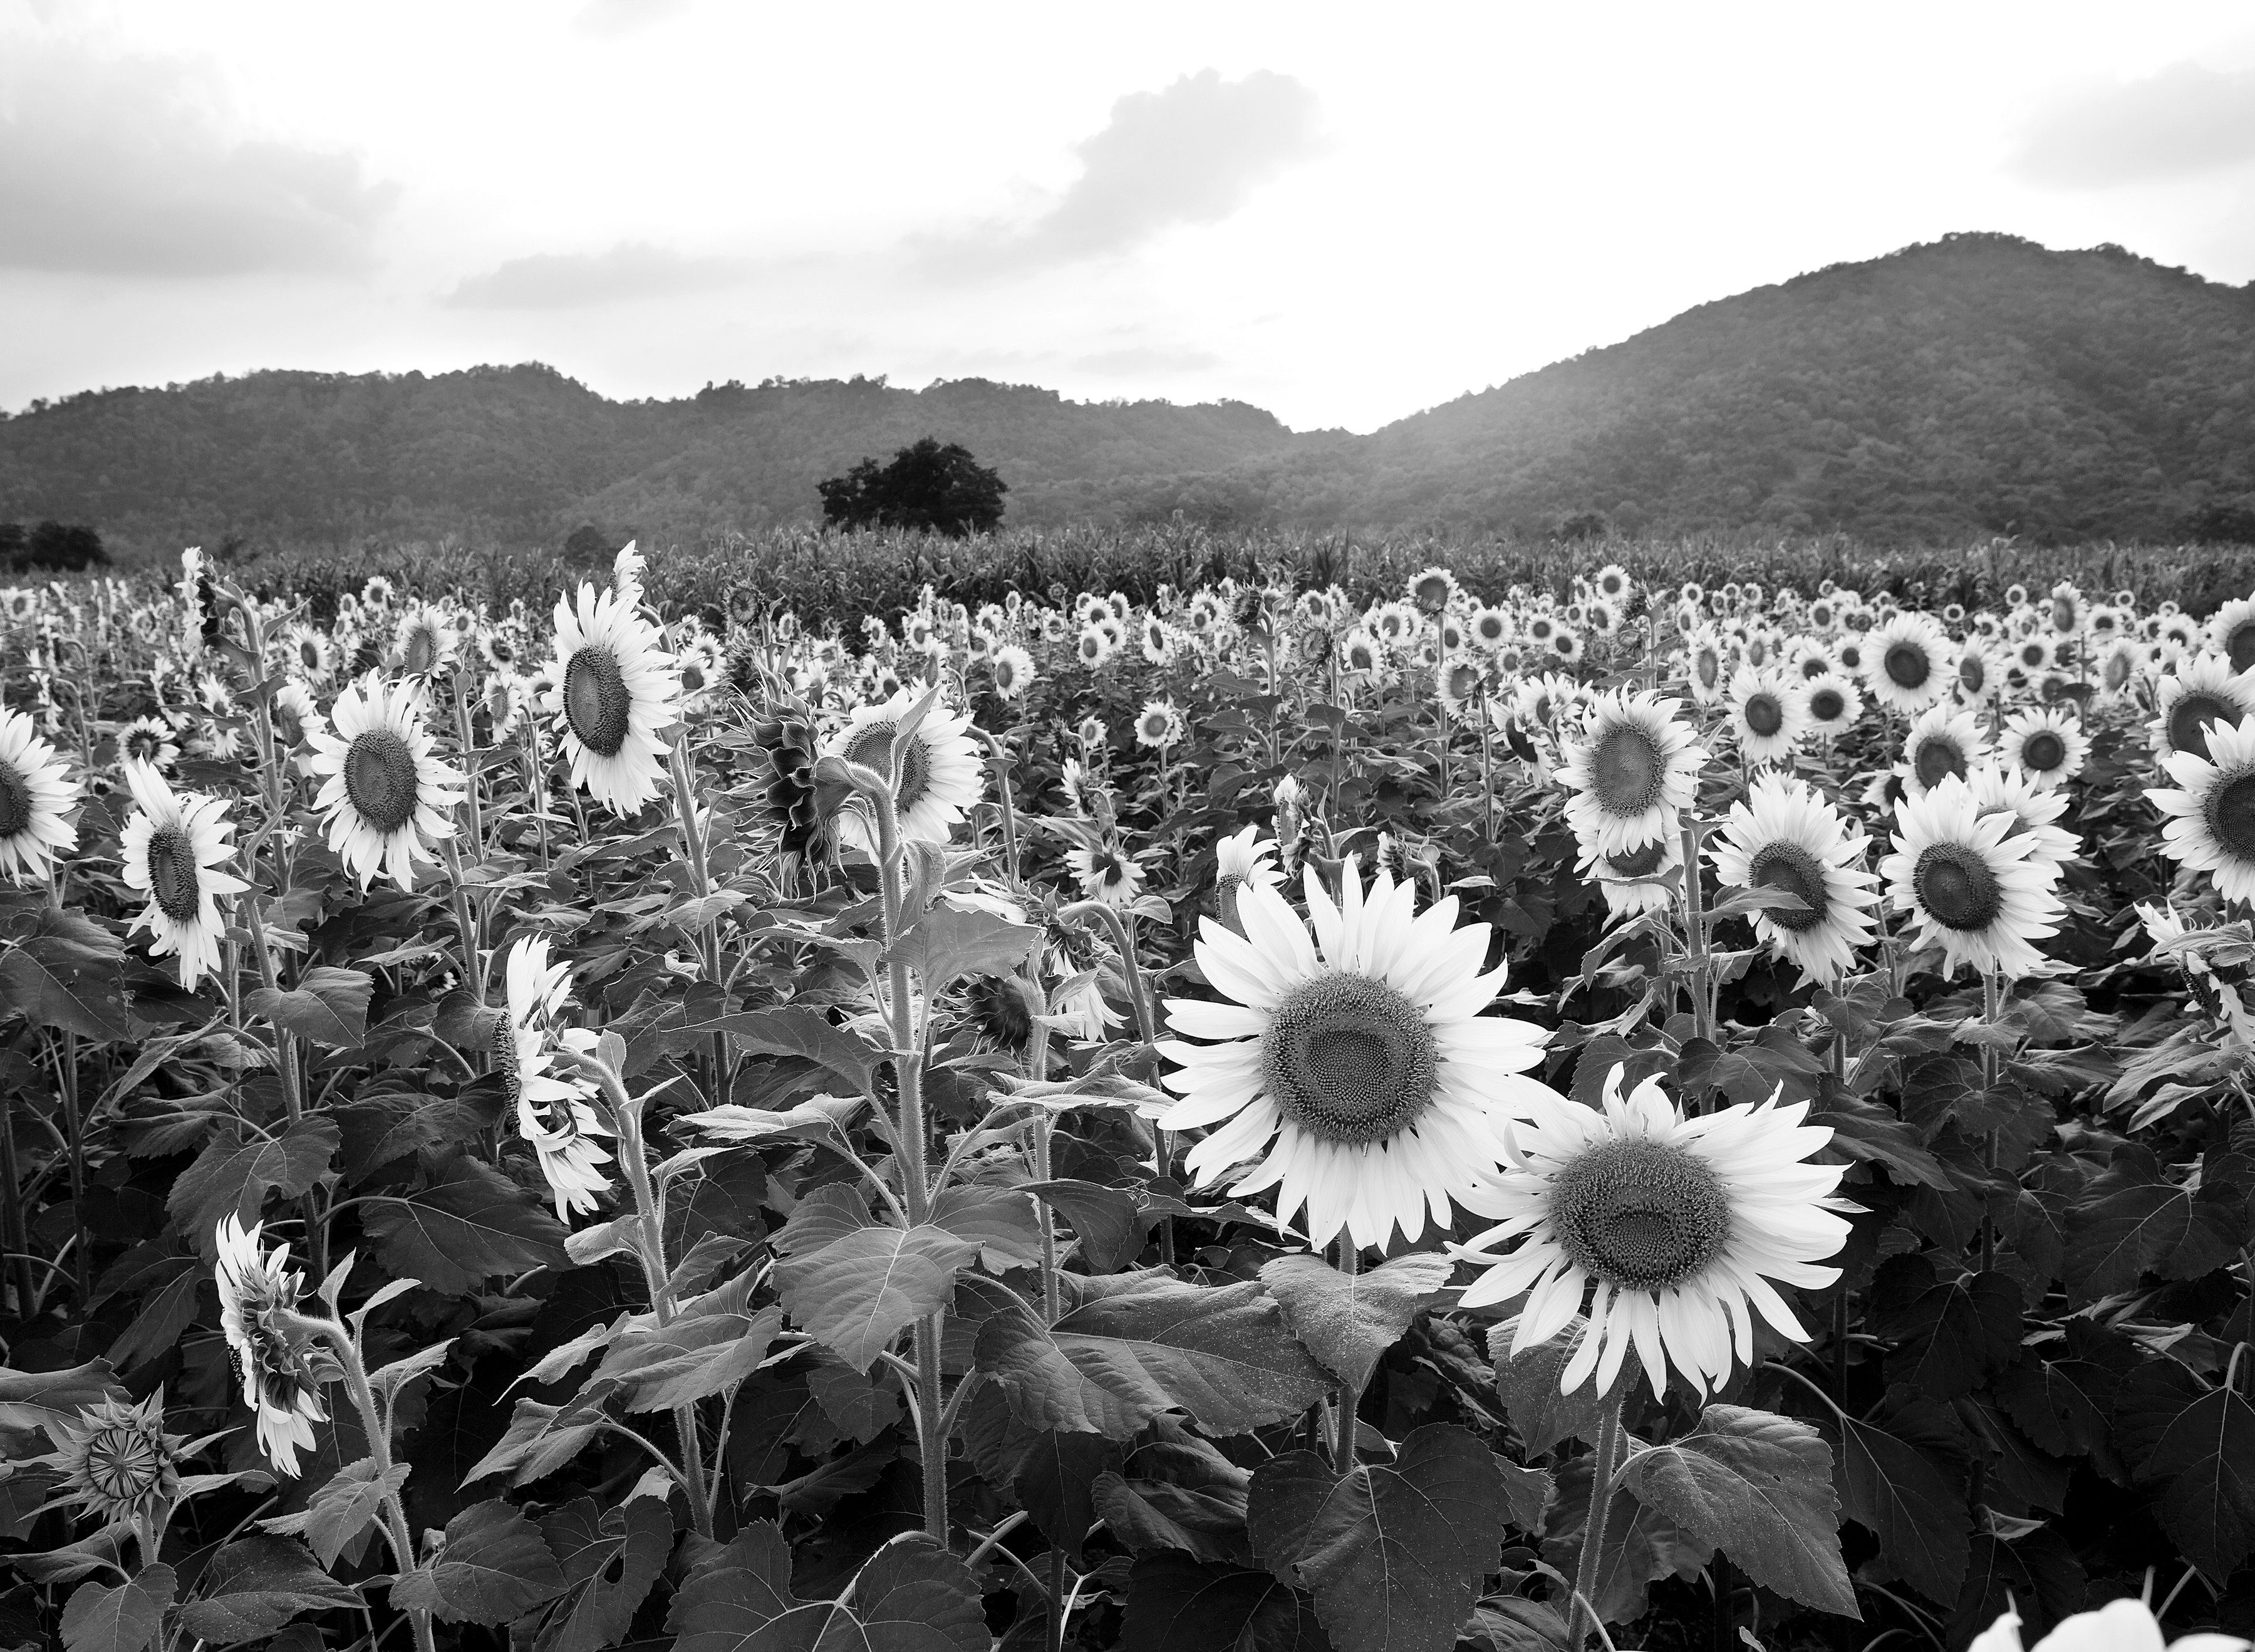 Fototapete Papermoon & Sonnenblumenfeld Schwarz Weiß